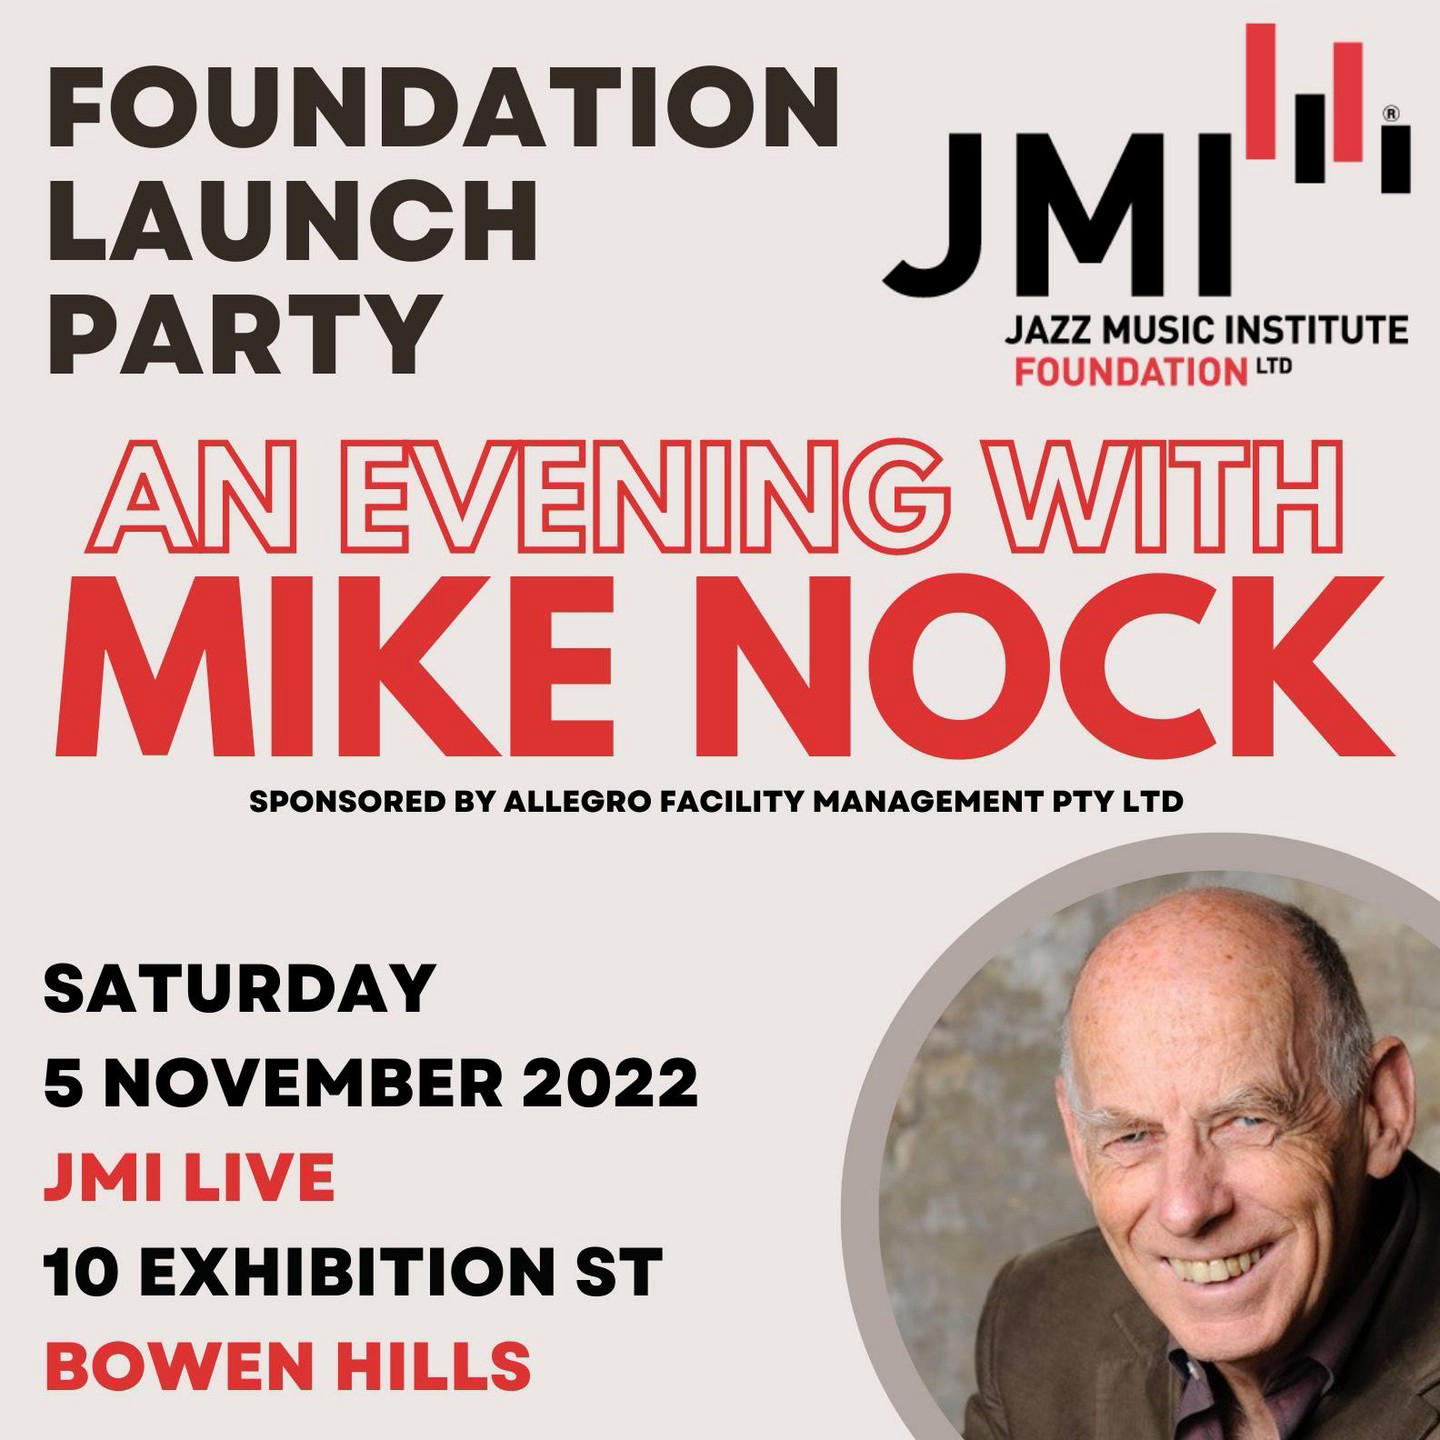 Jazz Music Institute - Don't miss legendary jazz pianist, Mike Nock performing at JMI Live next Satu